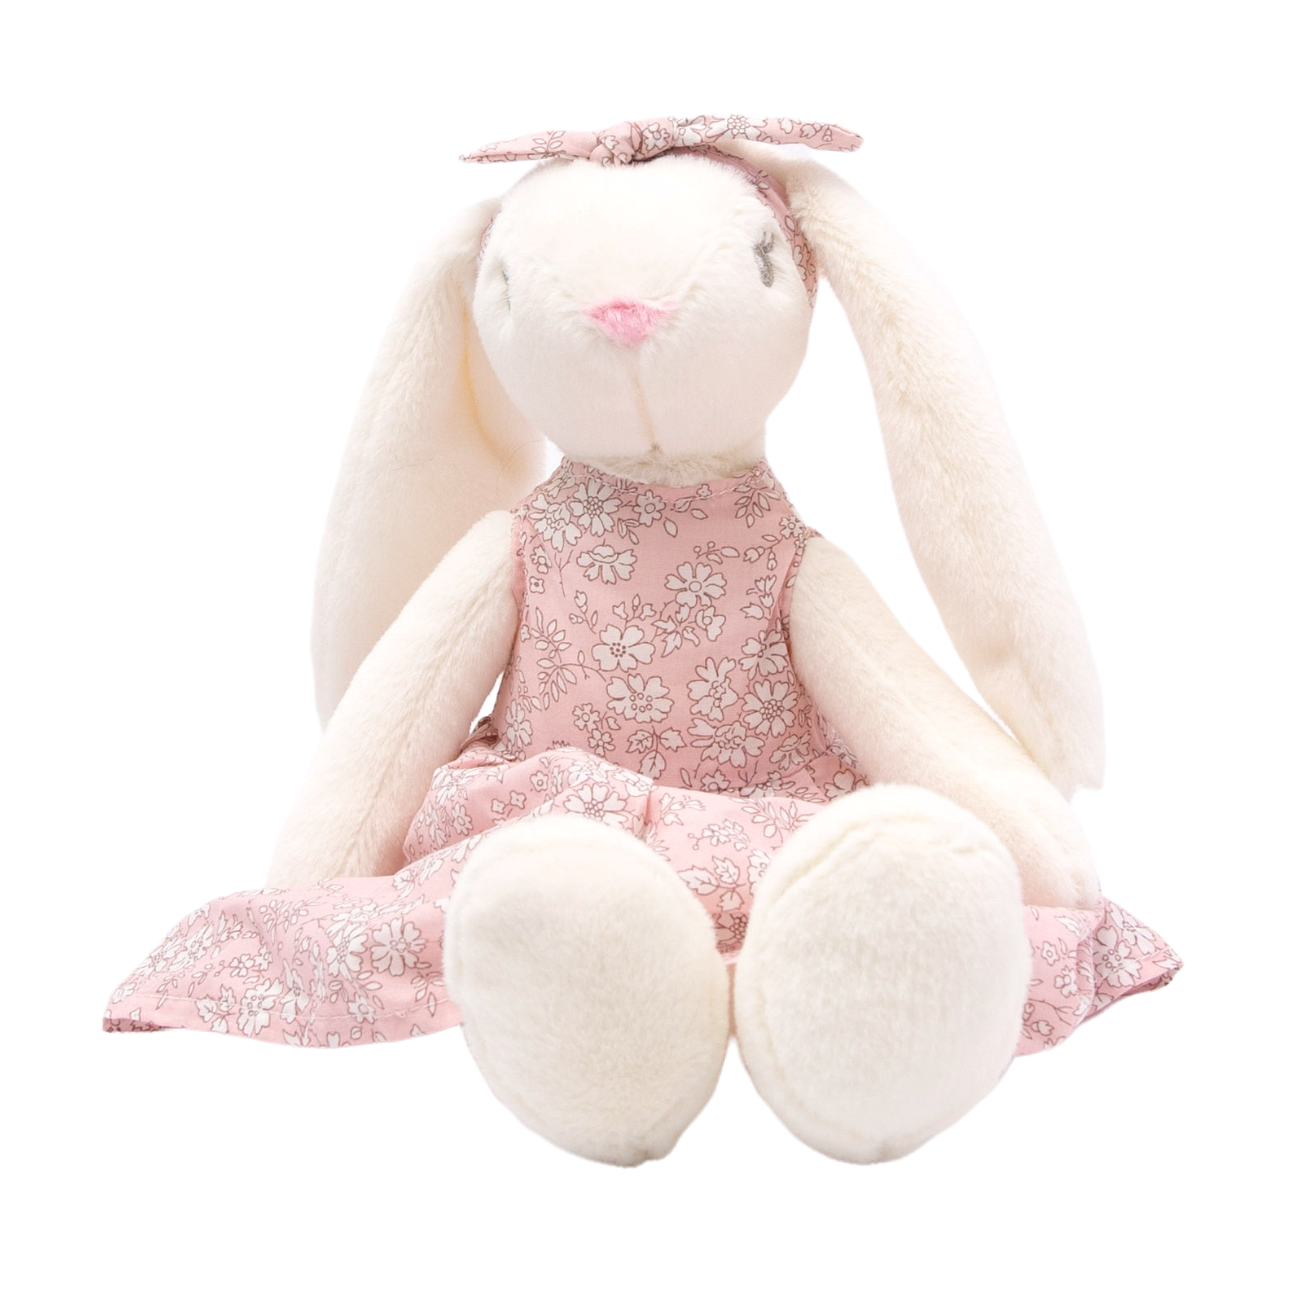 Petite Vous Lily the Rabbit - Pink dress